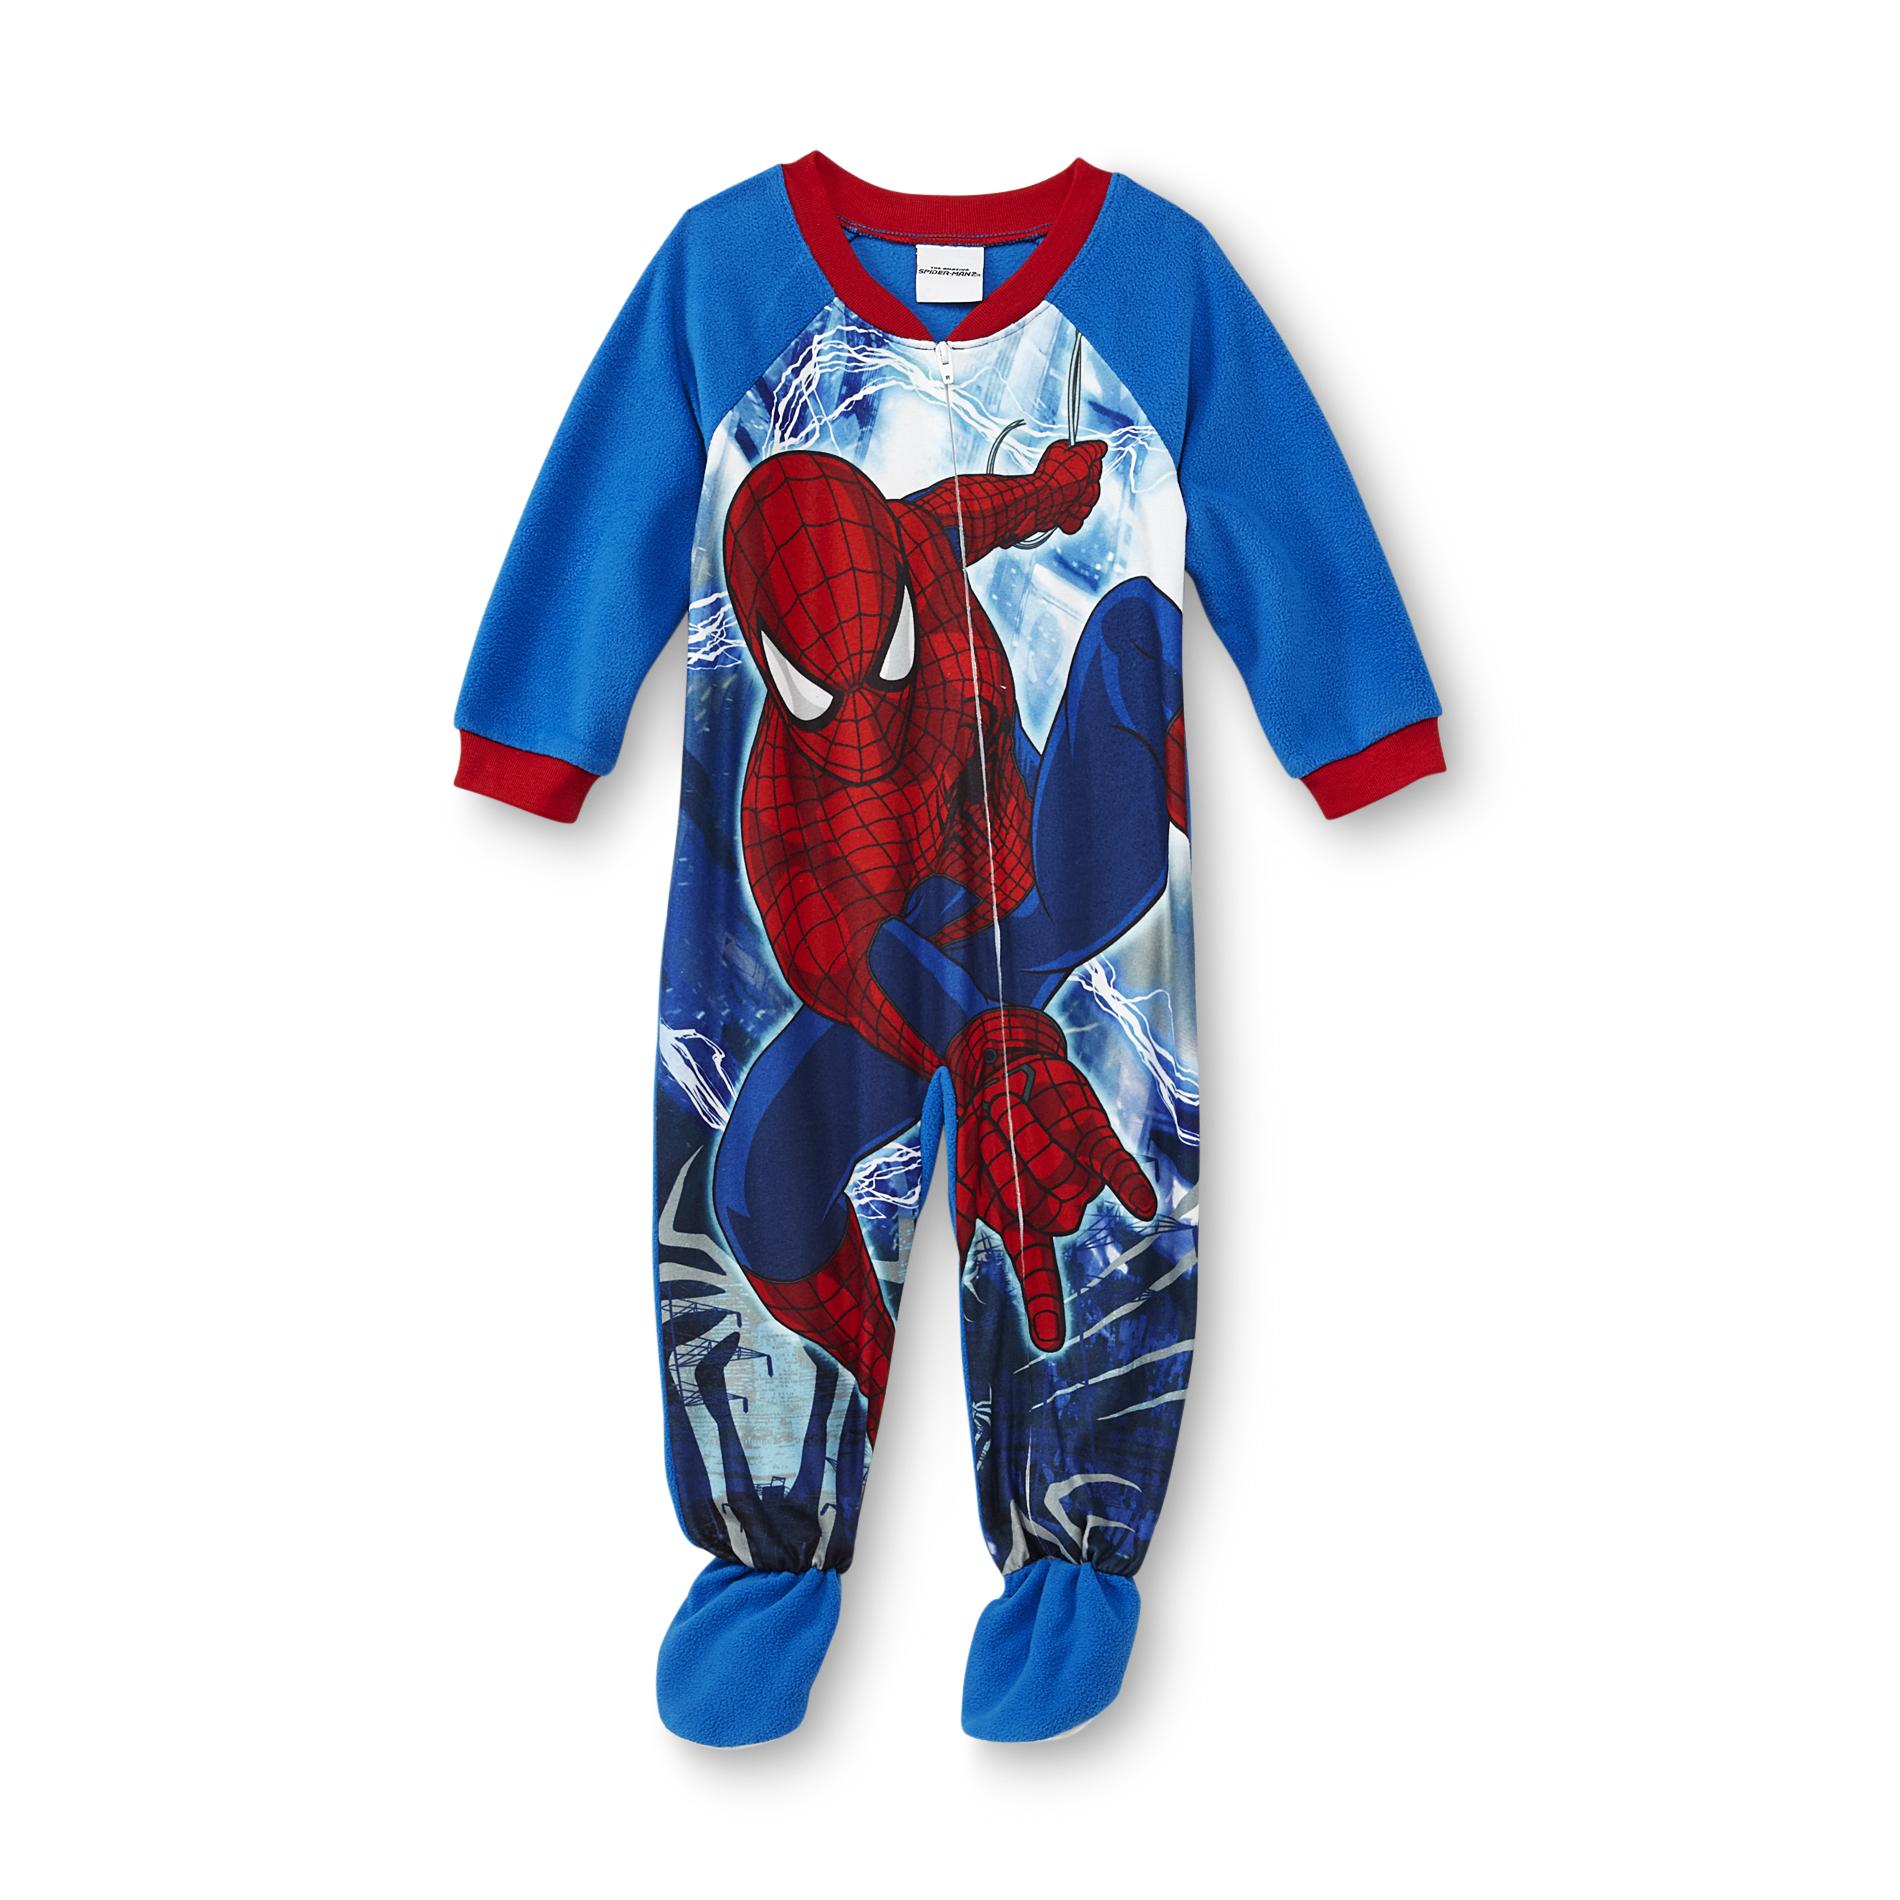 Marvel Infant & Toddler Boy's Footed Pajamas - Spider-Man